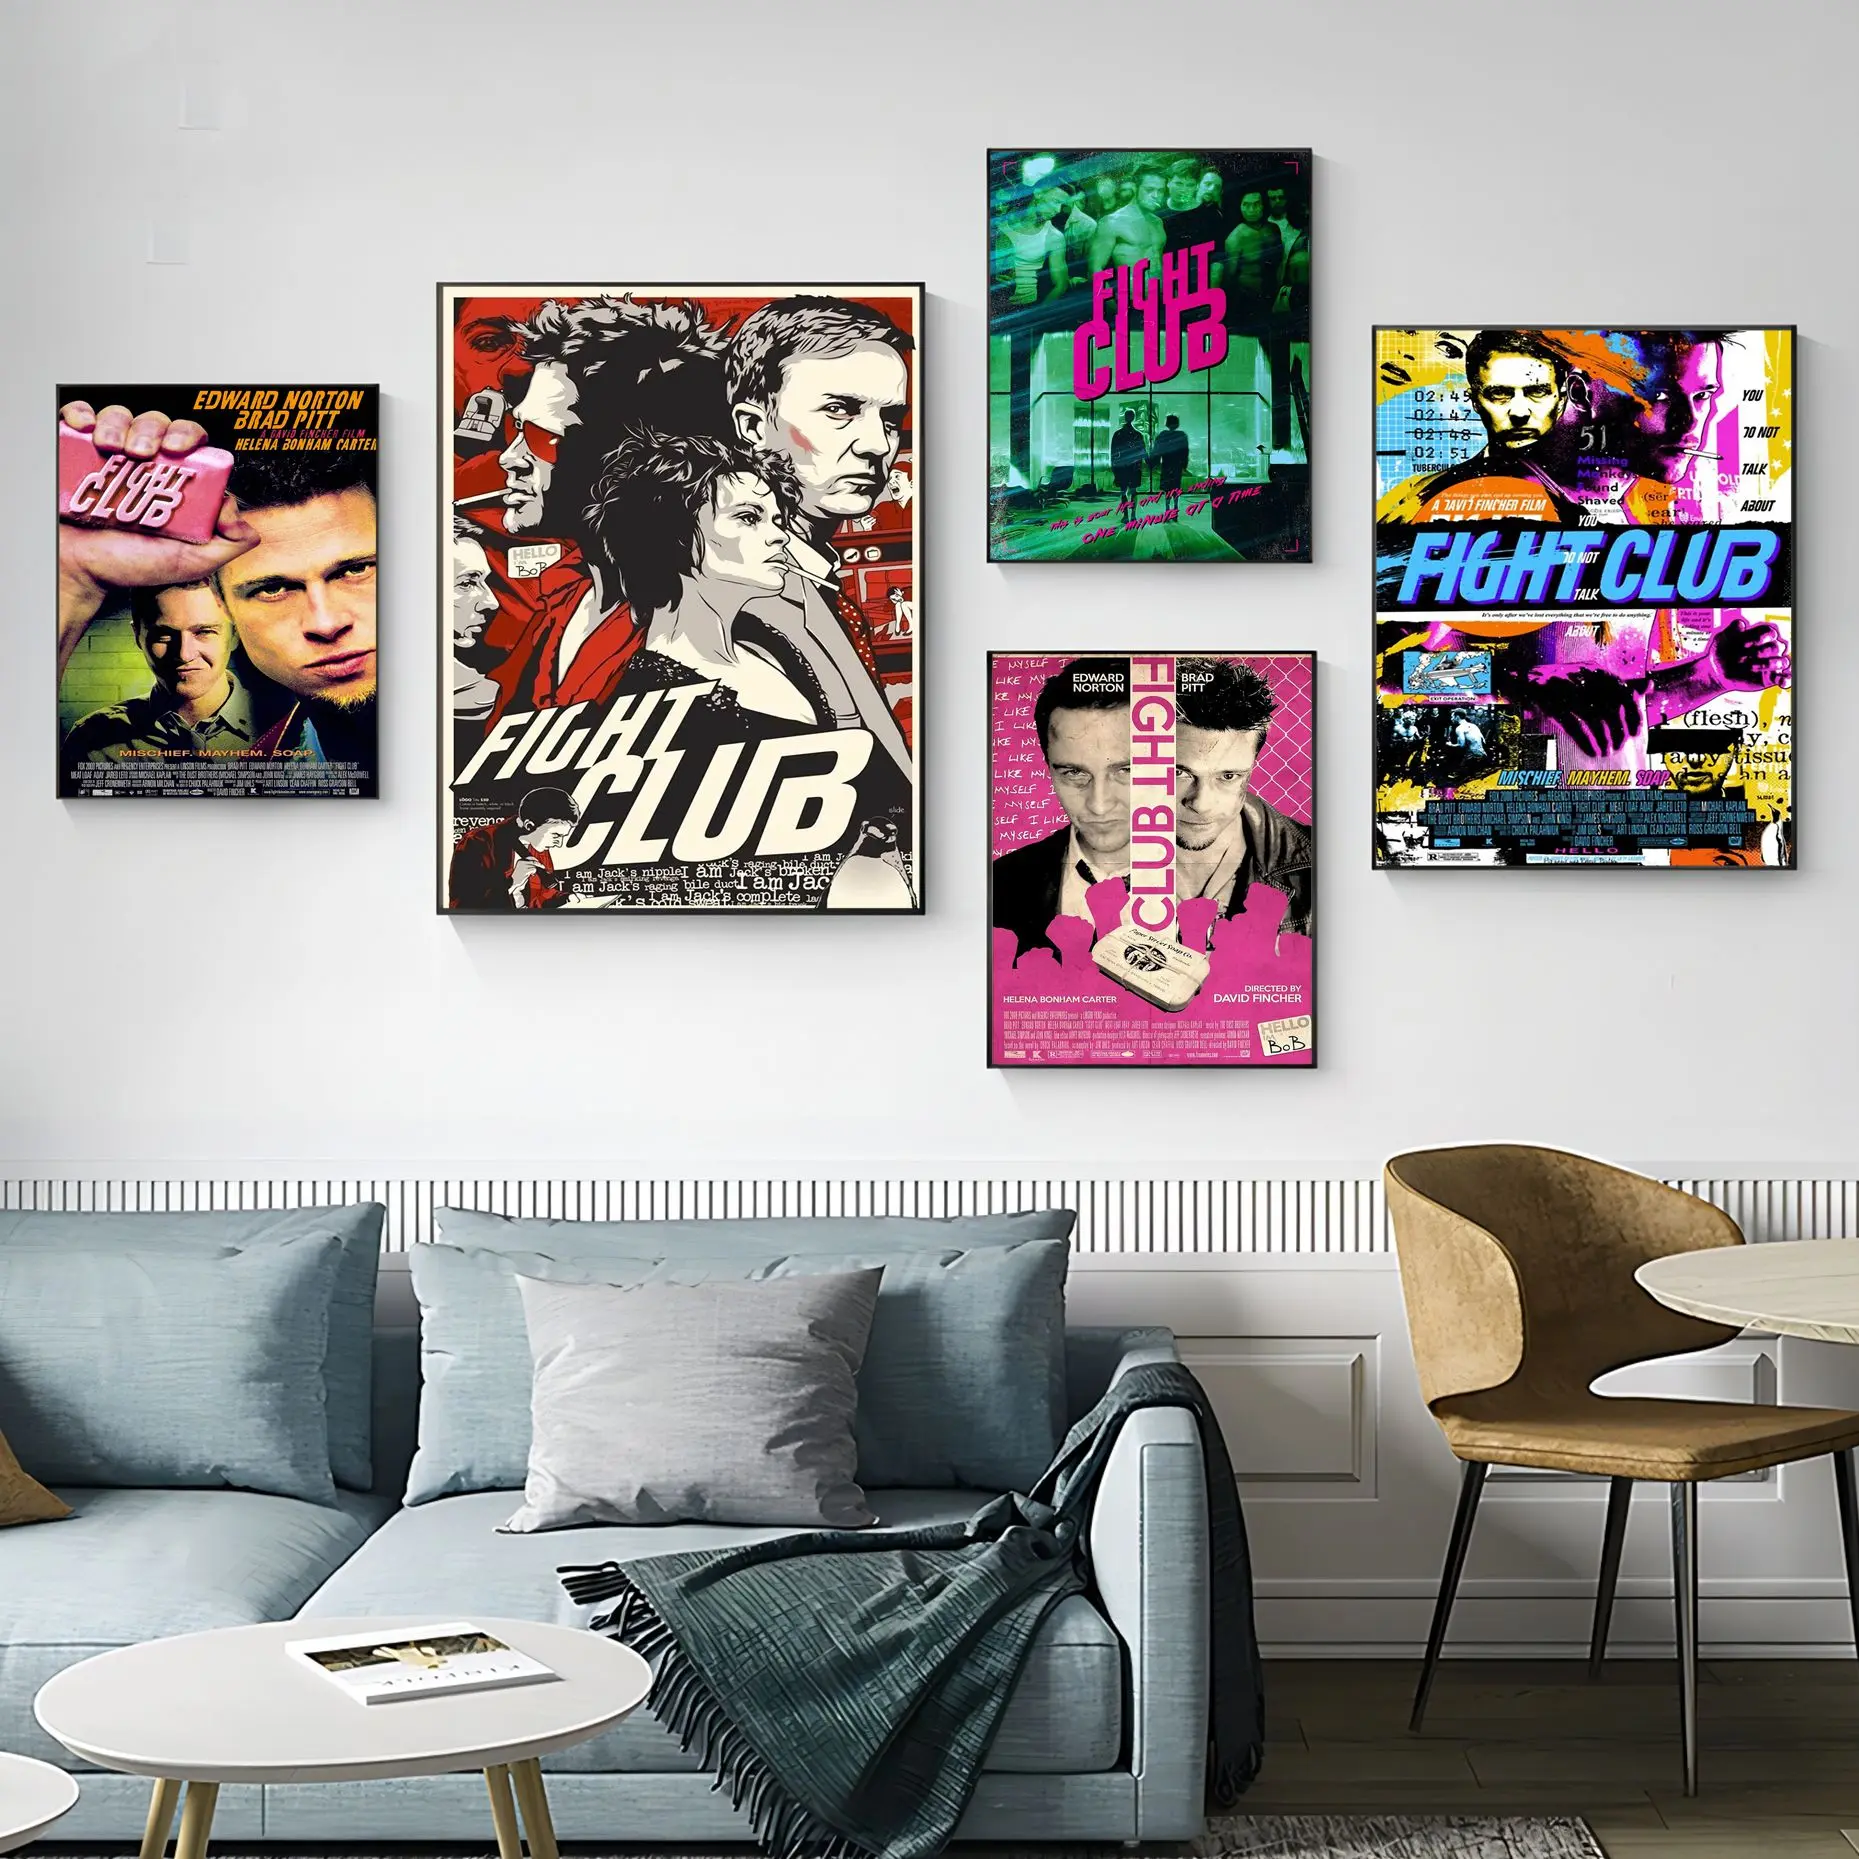 

Fight Club Movie Brad Pitt Film Whitepaper Poster Fancy Wall Sticker For Living Room Bar Decoration Kawaii Room Decor